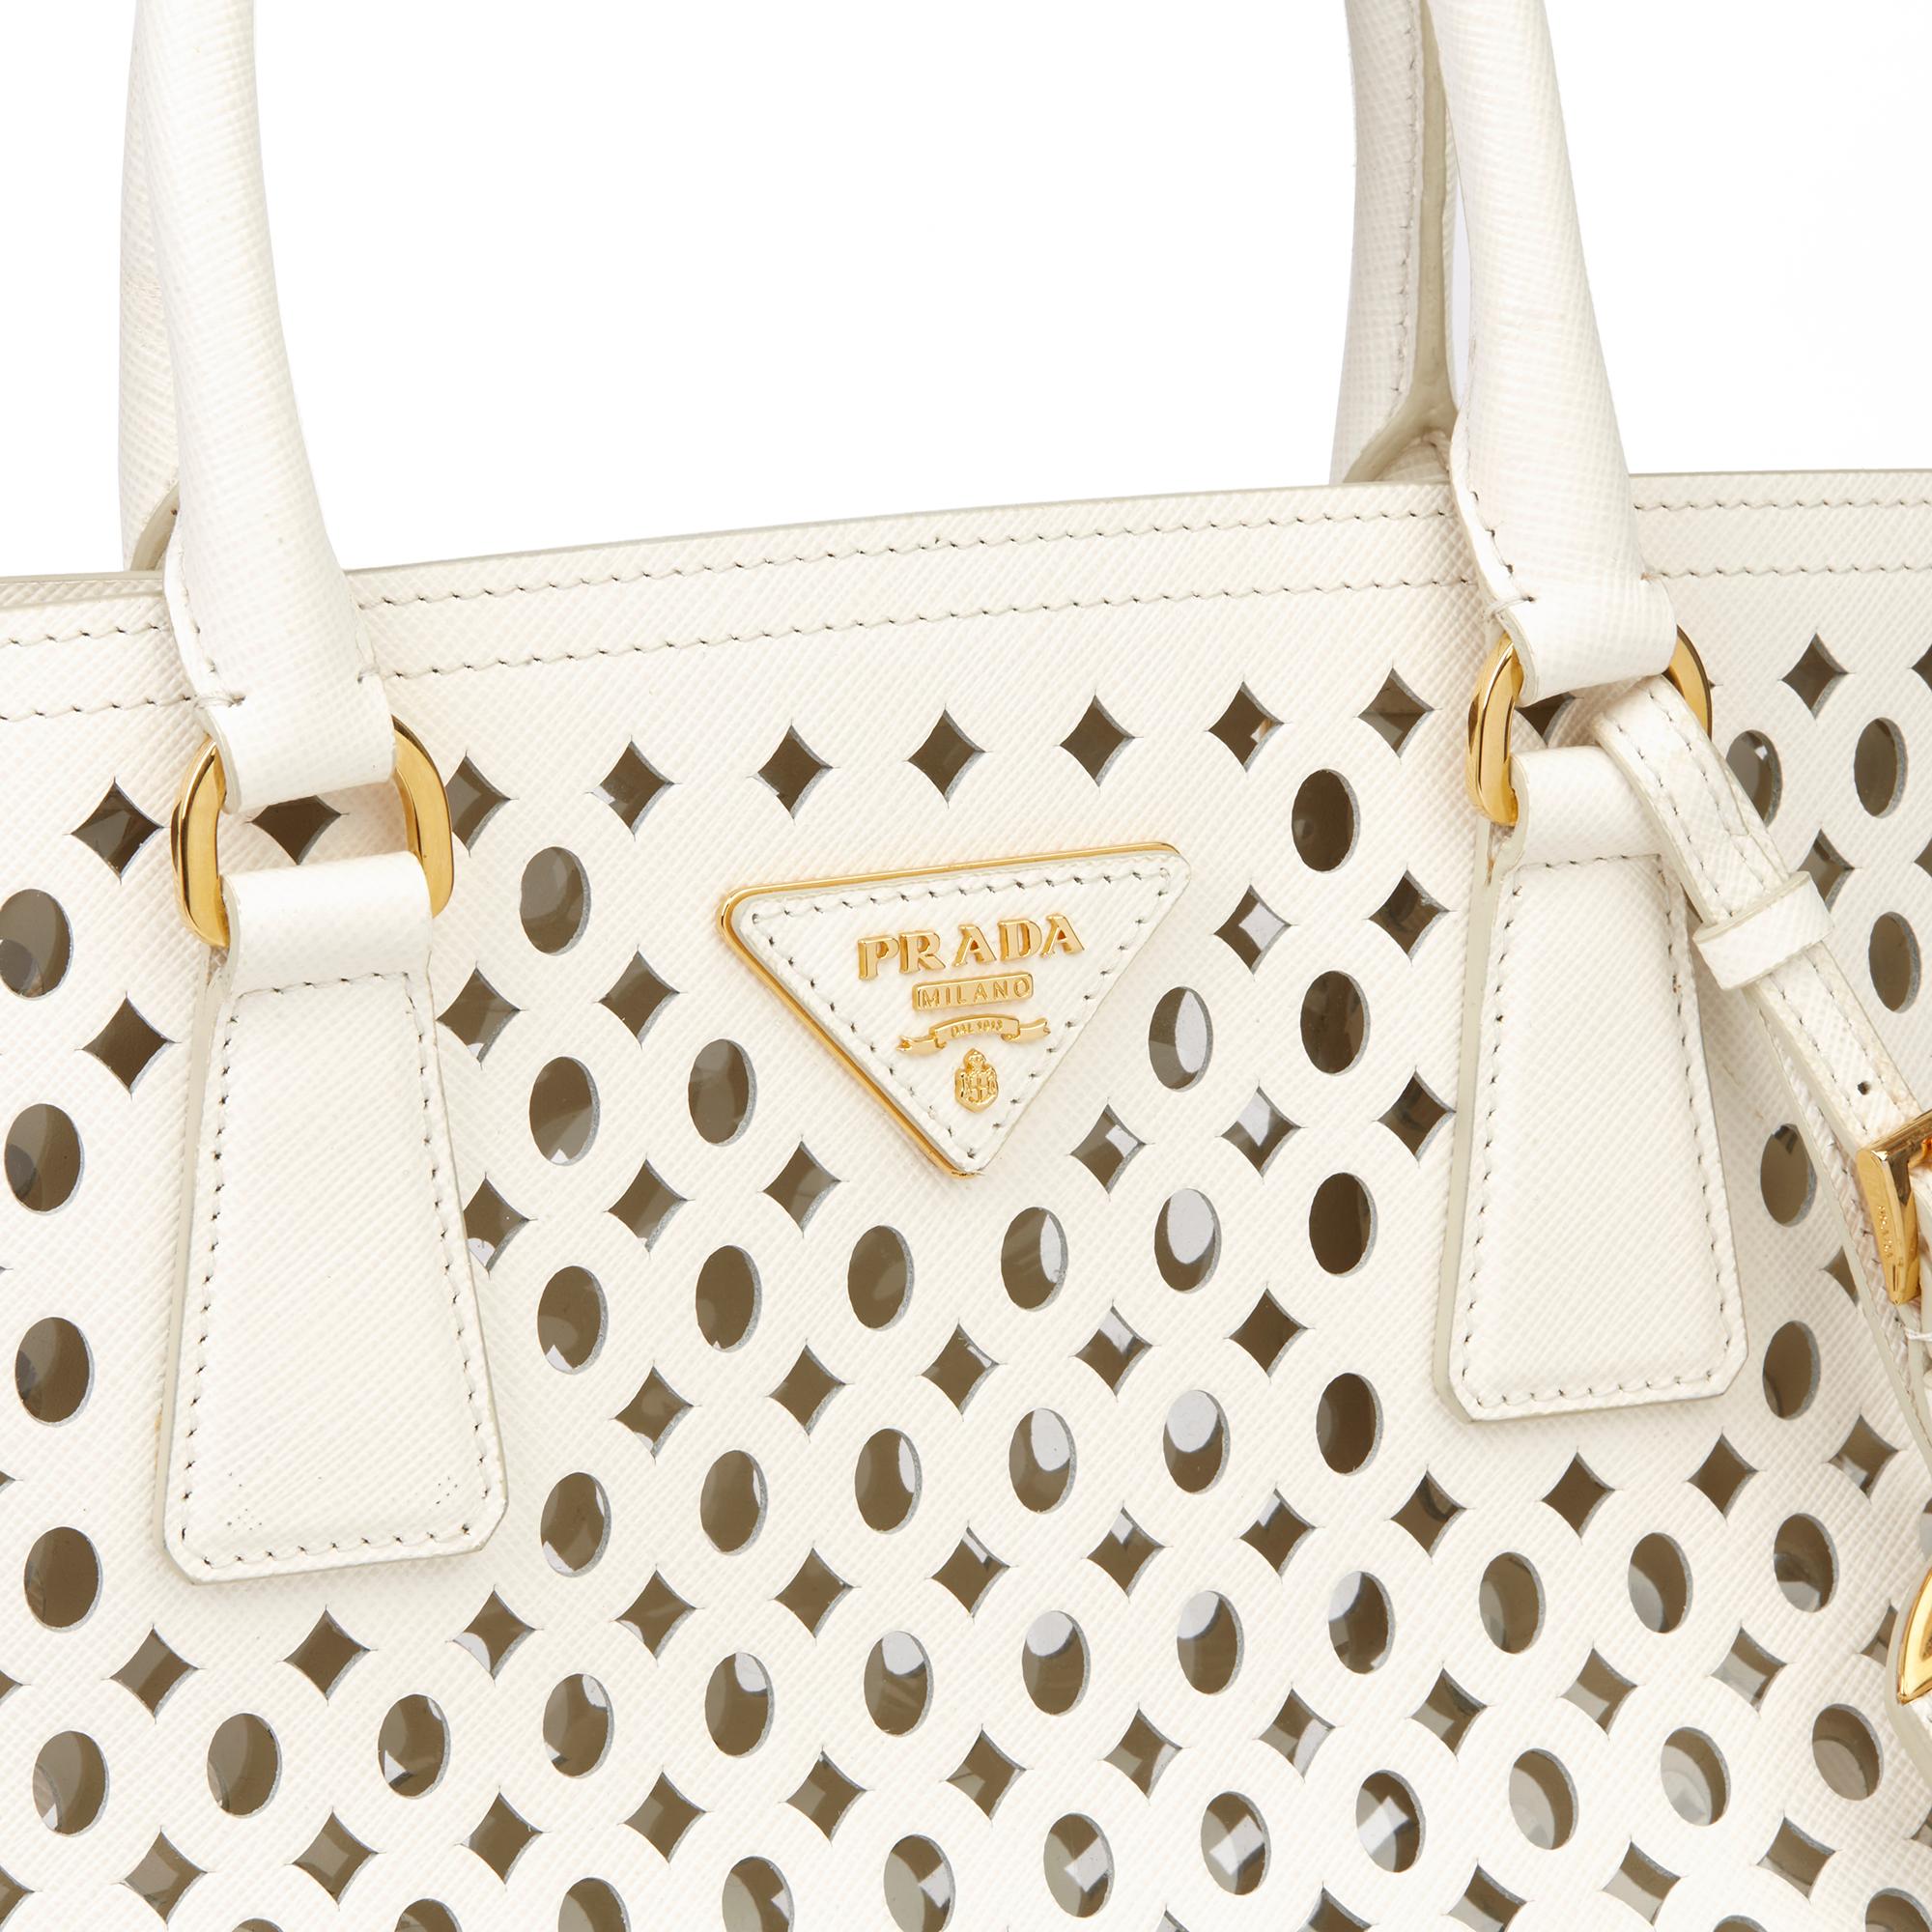 Women's 2013 Prada White Perforated Saffiano Leather & PVC Fori Tote